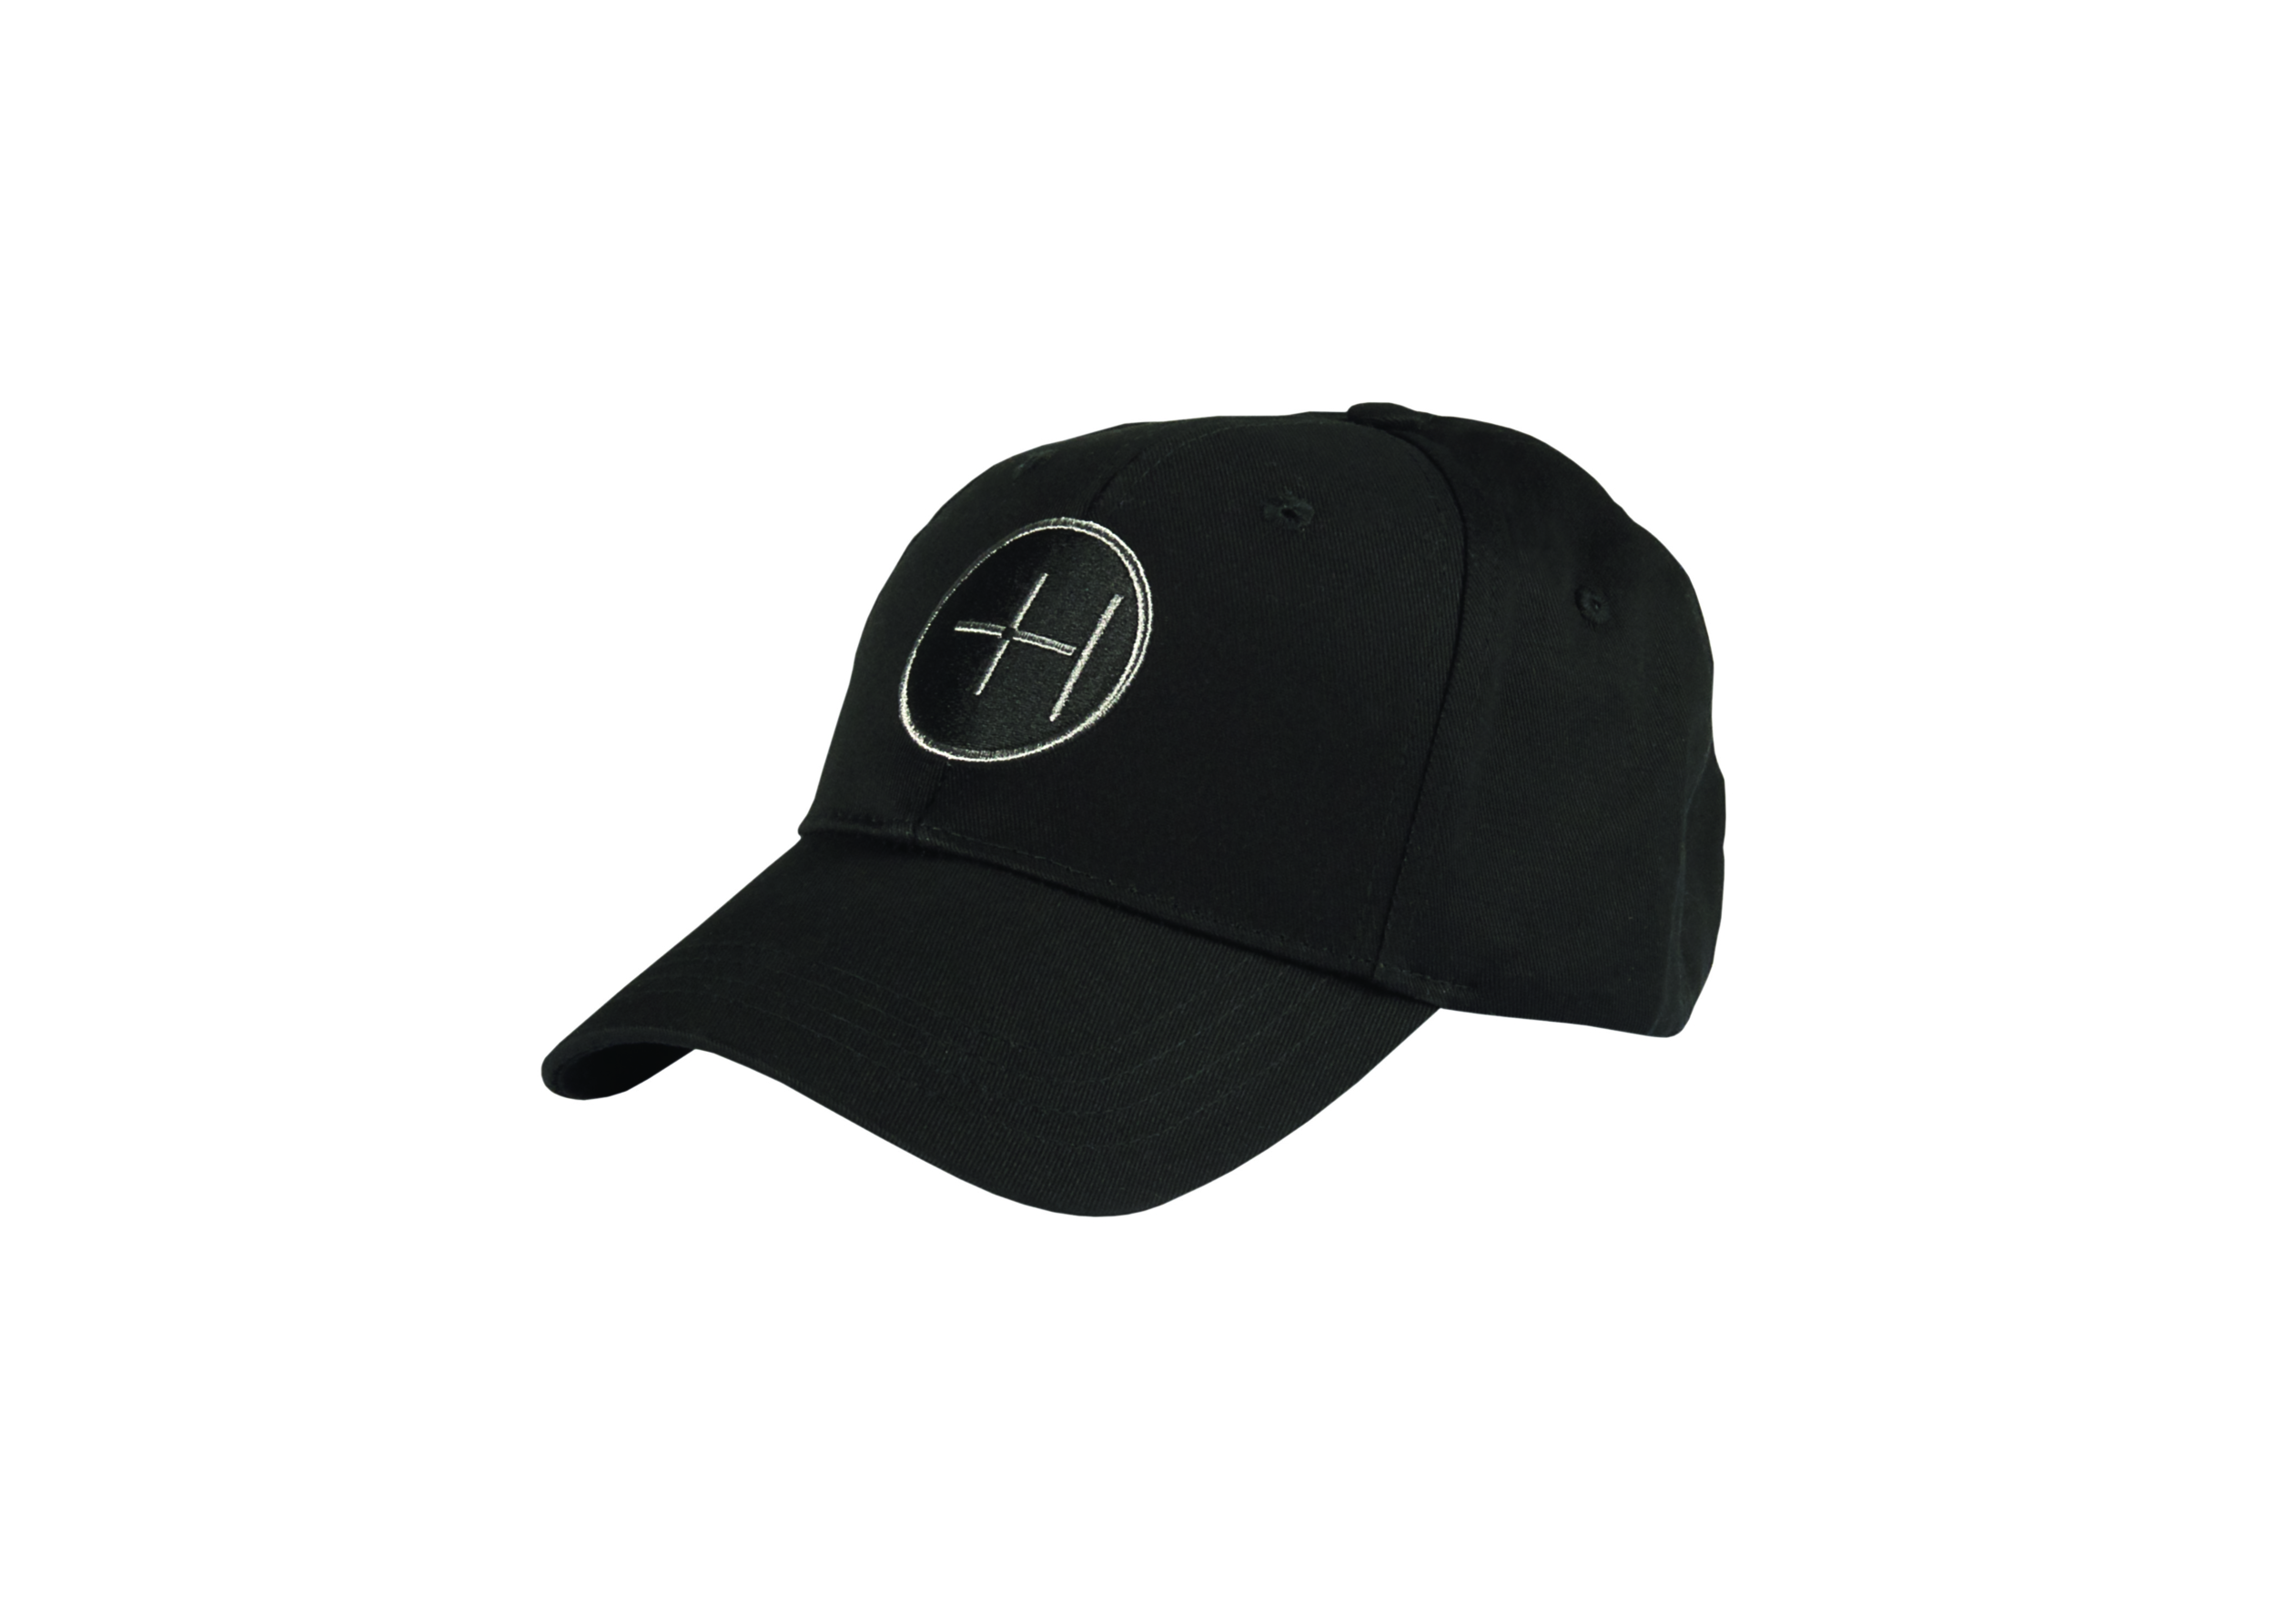 99320 – Black cotton twill cap